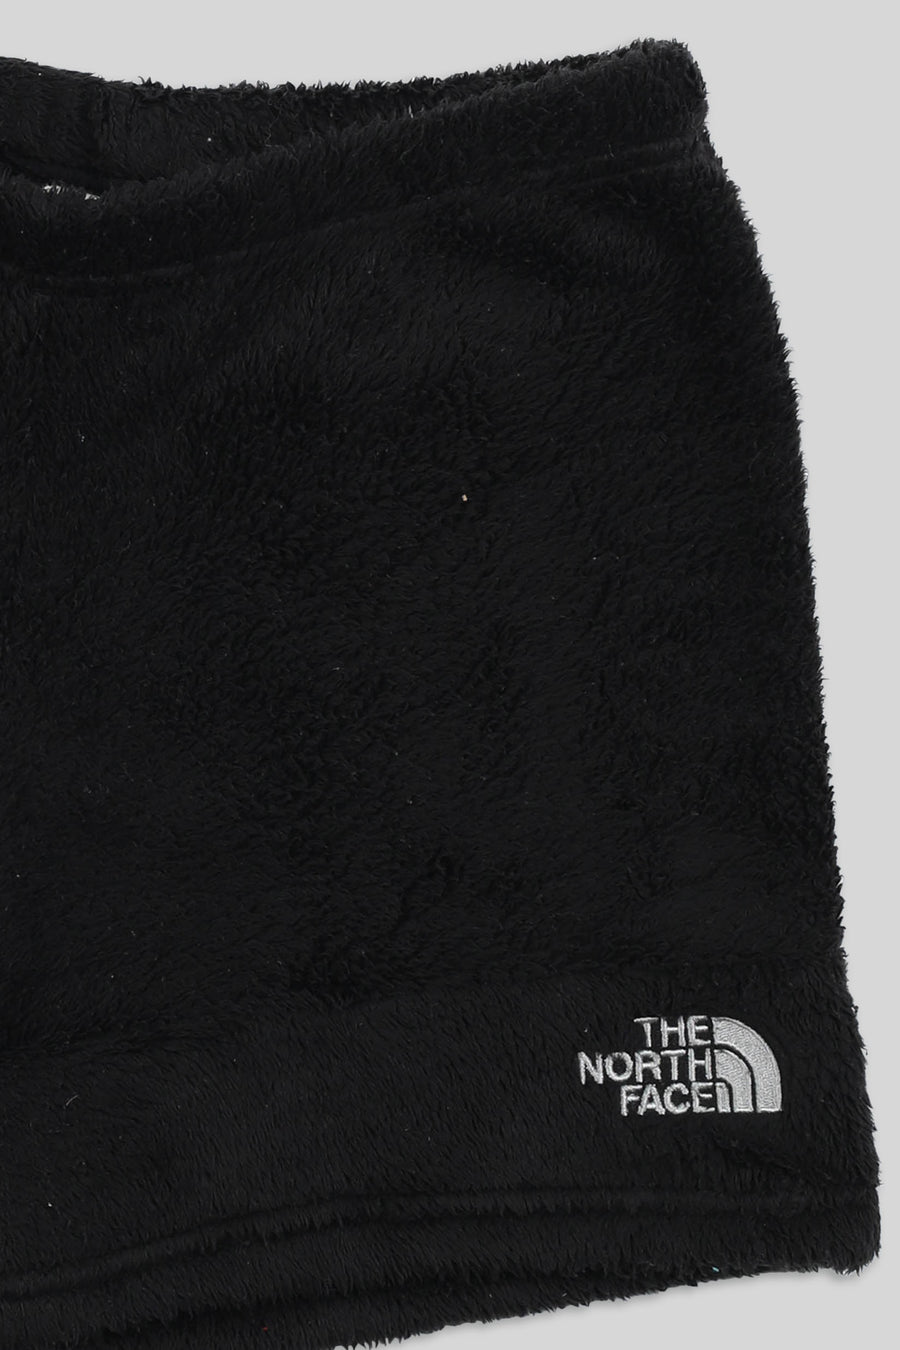 Rework North Face Fuzzy Shorts - XS, S, M, L, XL